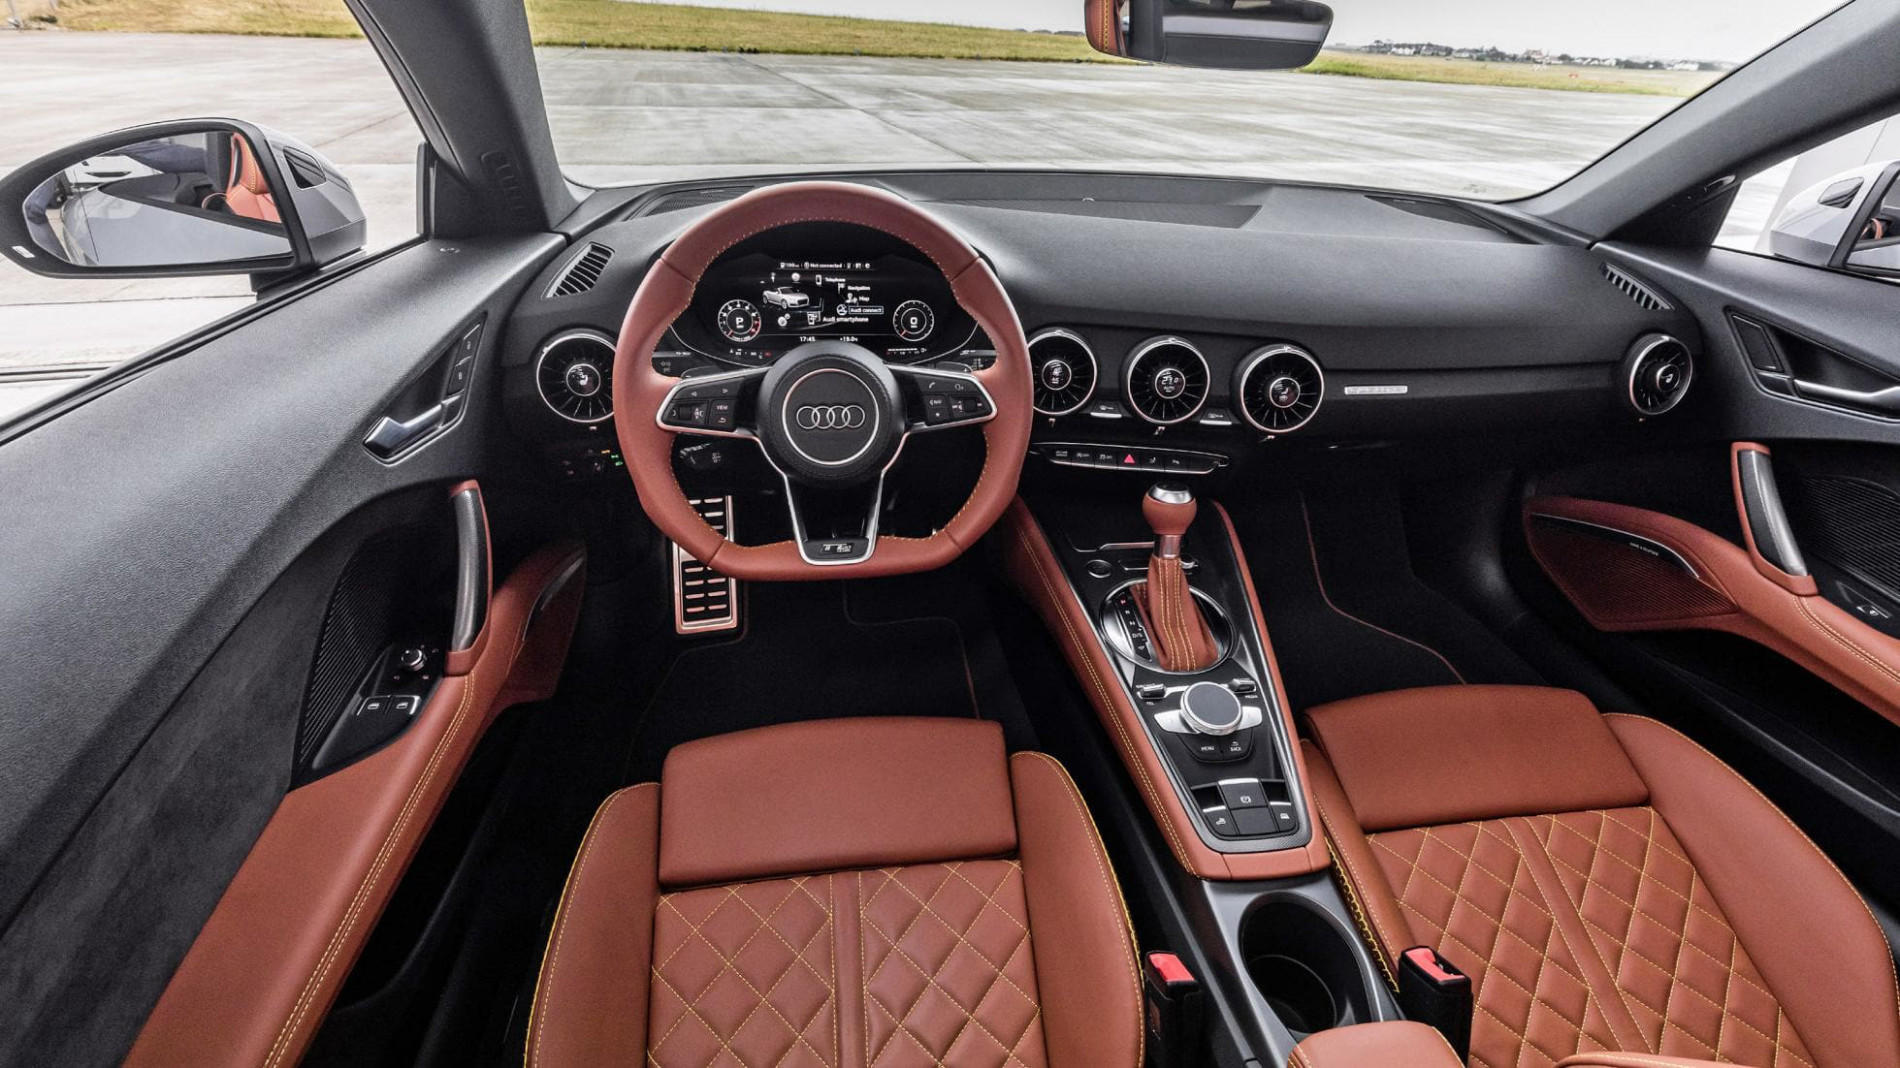 Audi TT 4 Years Edition -- "Baseball Leather" is Back - audi tt baseball seats